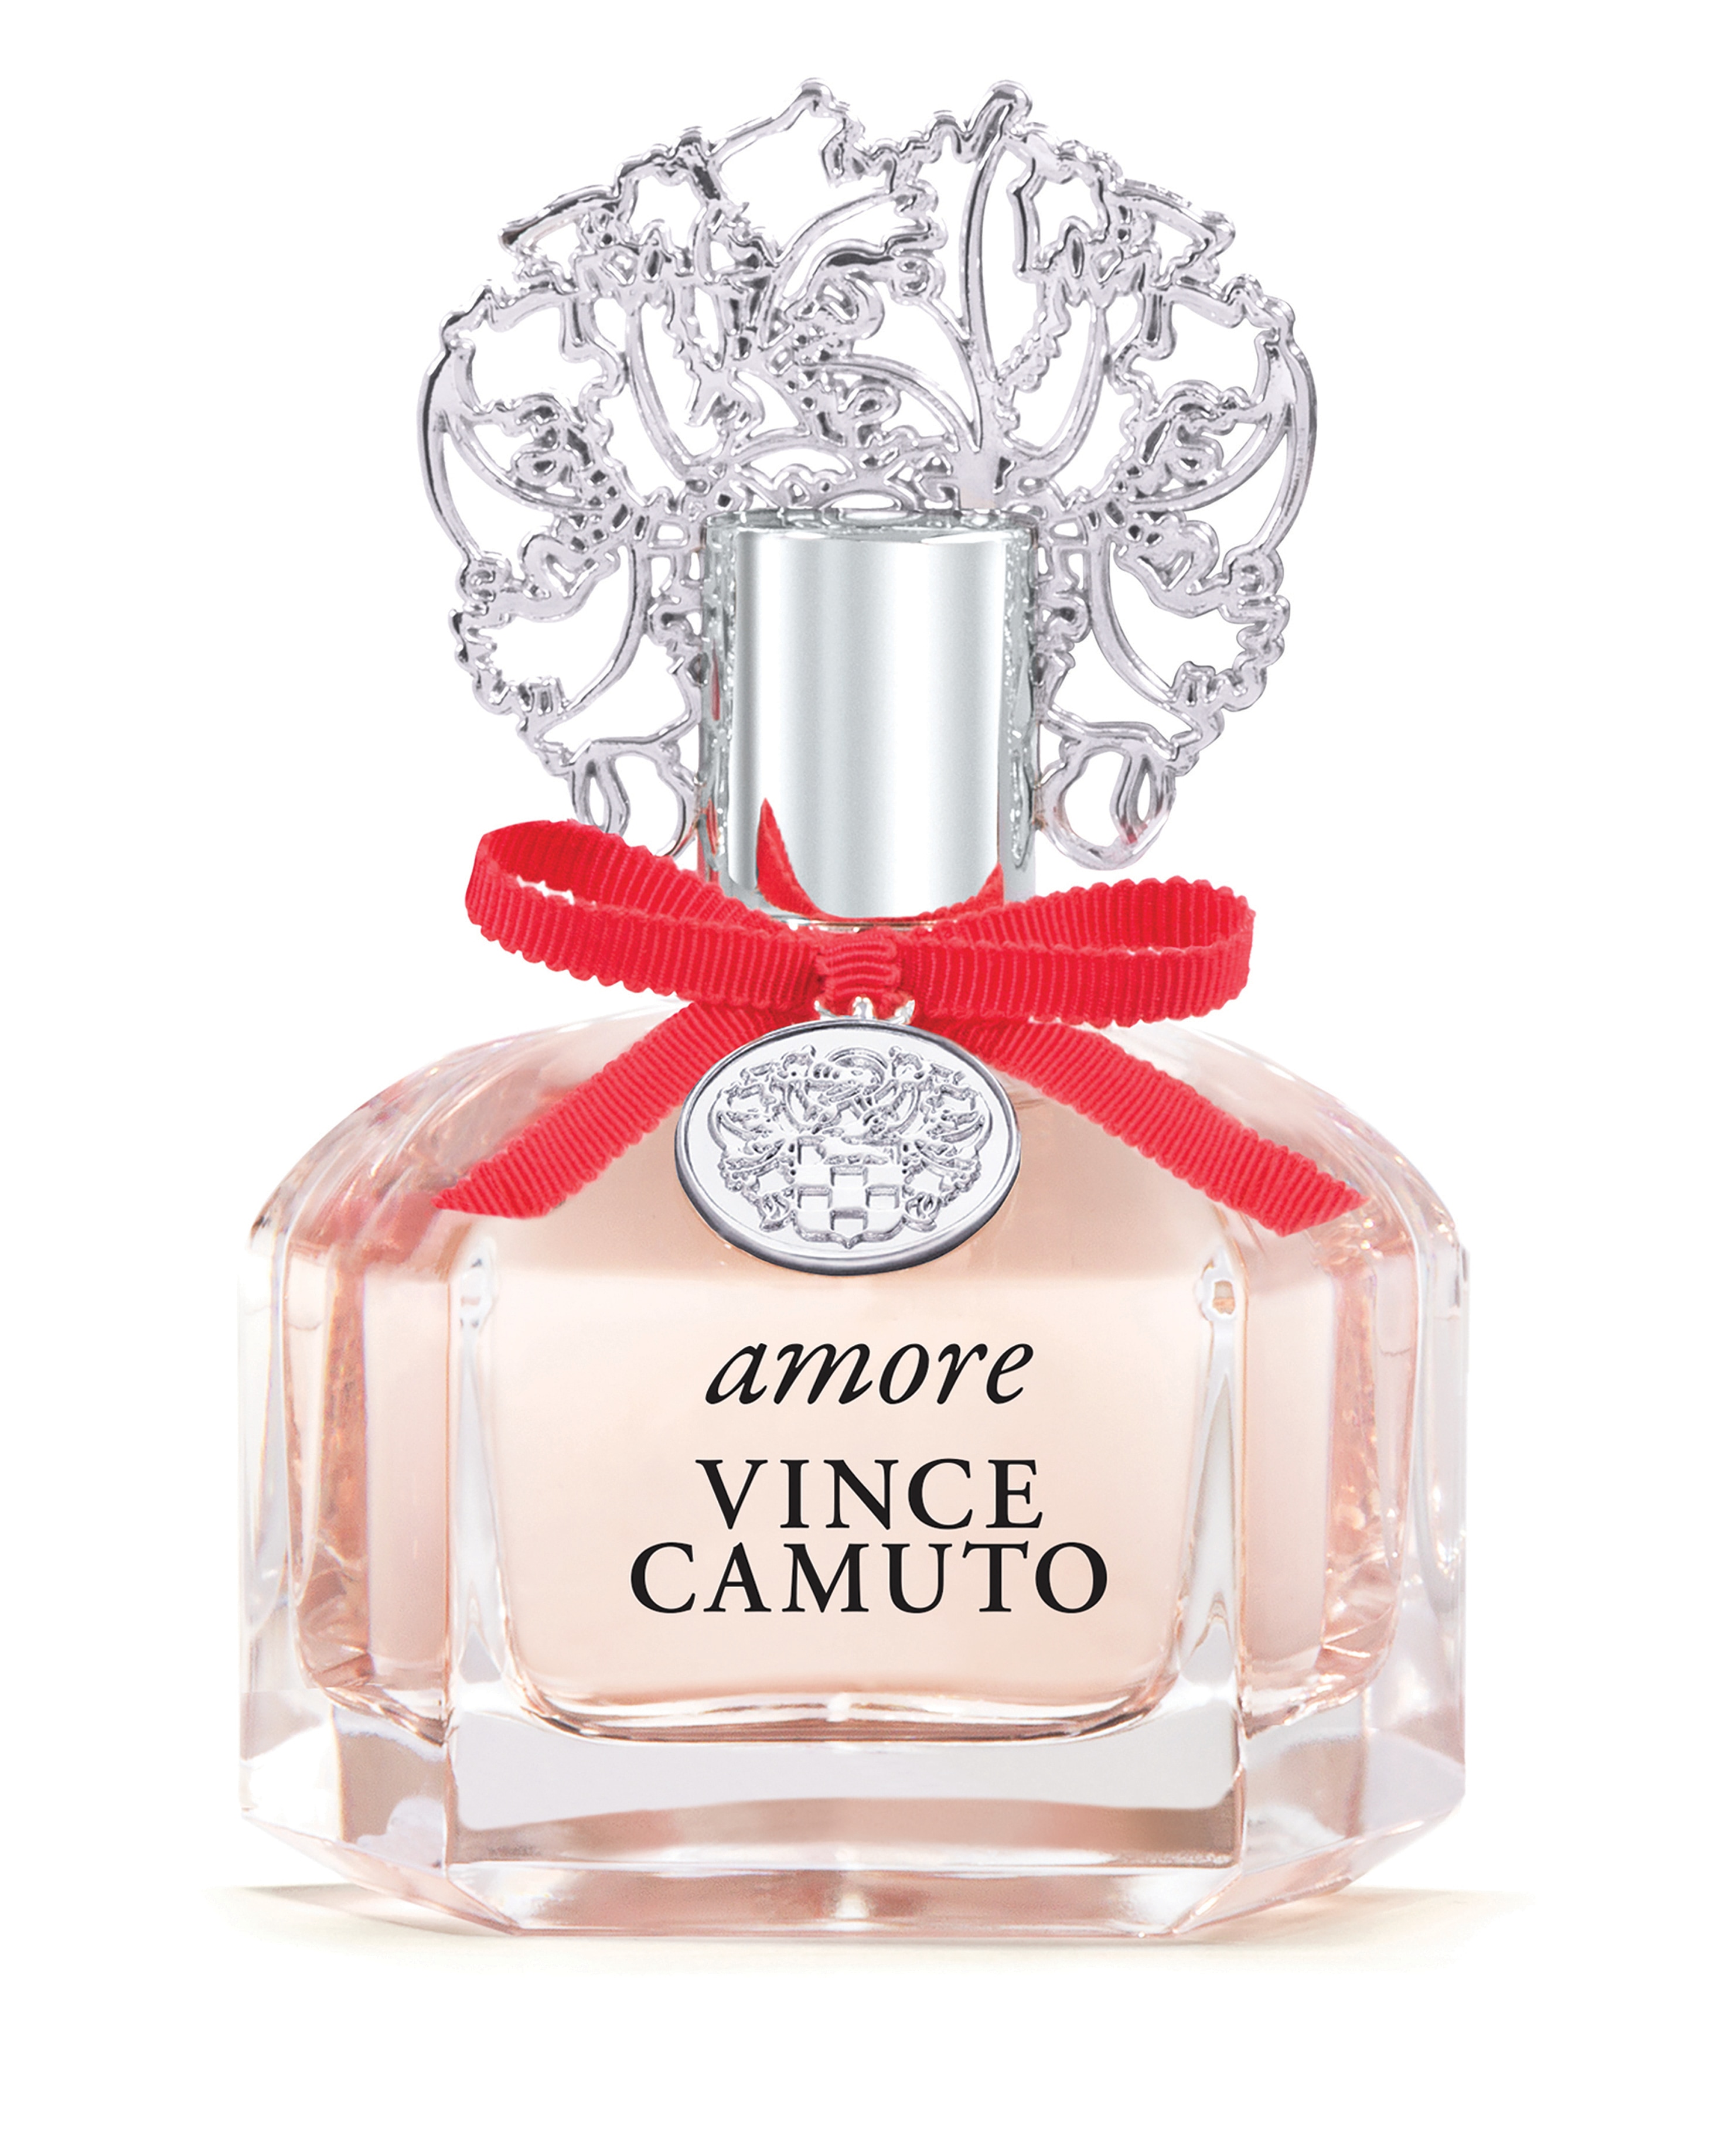 Vince Camuto Amore Perfume - Vince Camuto